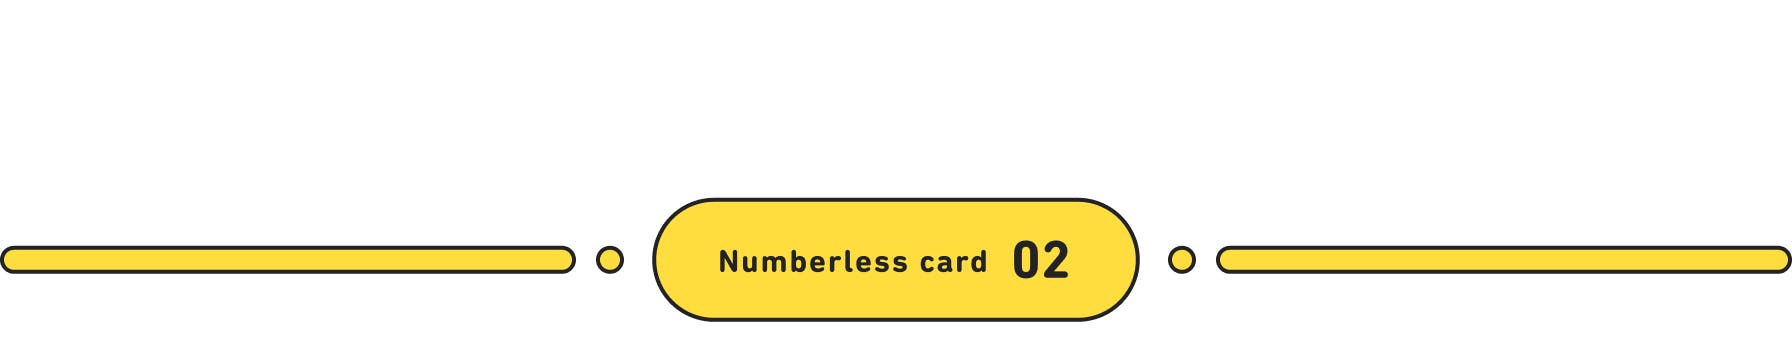 Numberless card 02